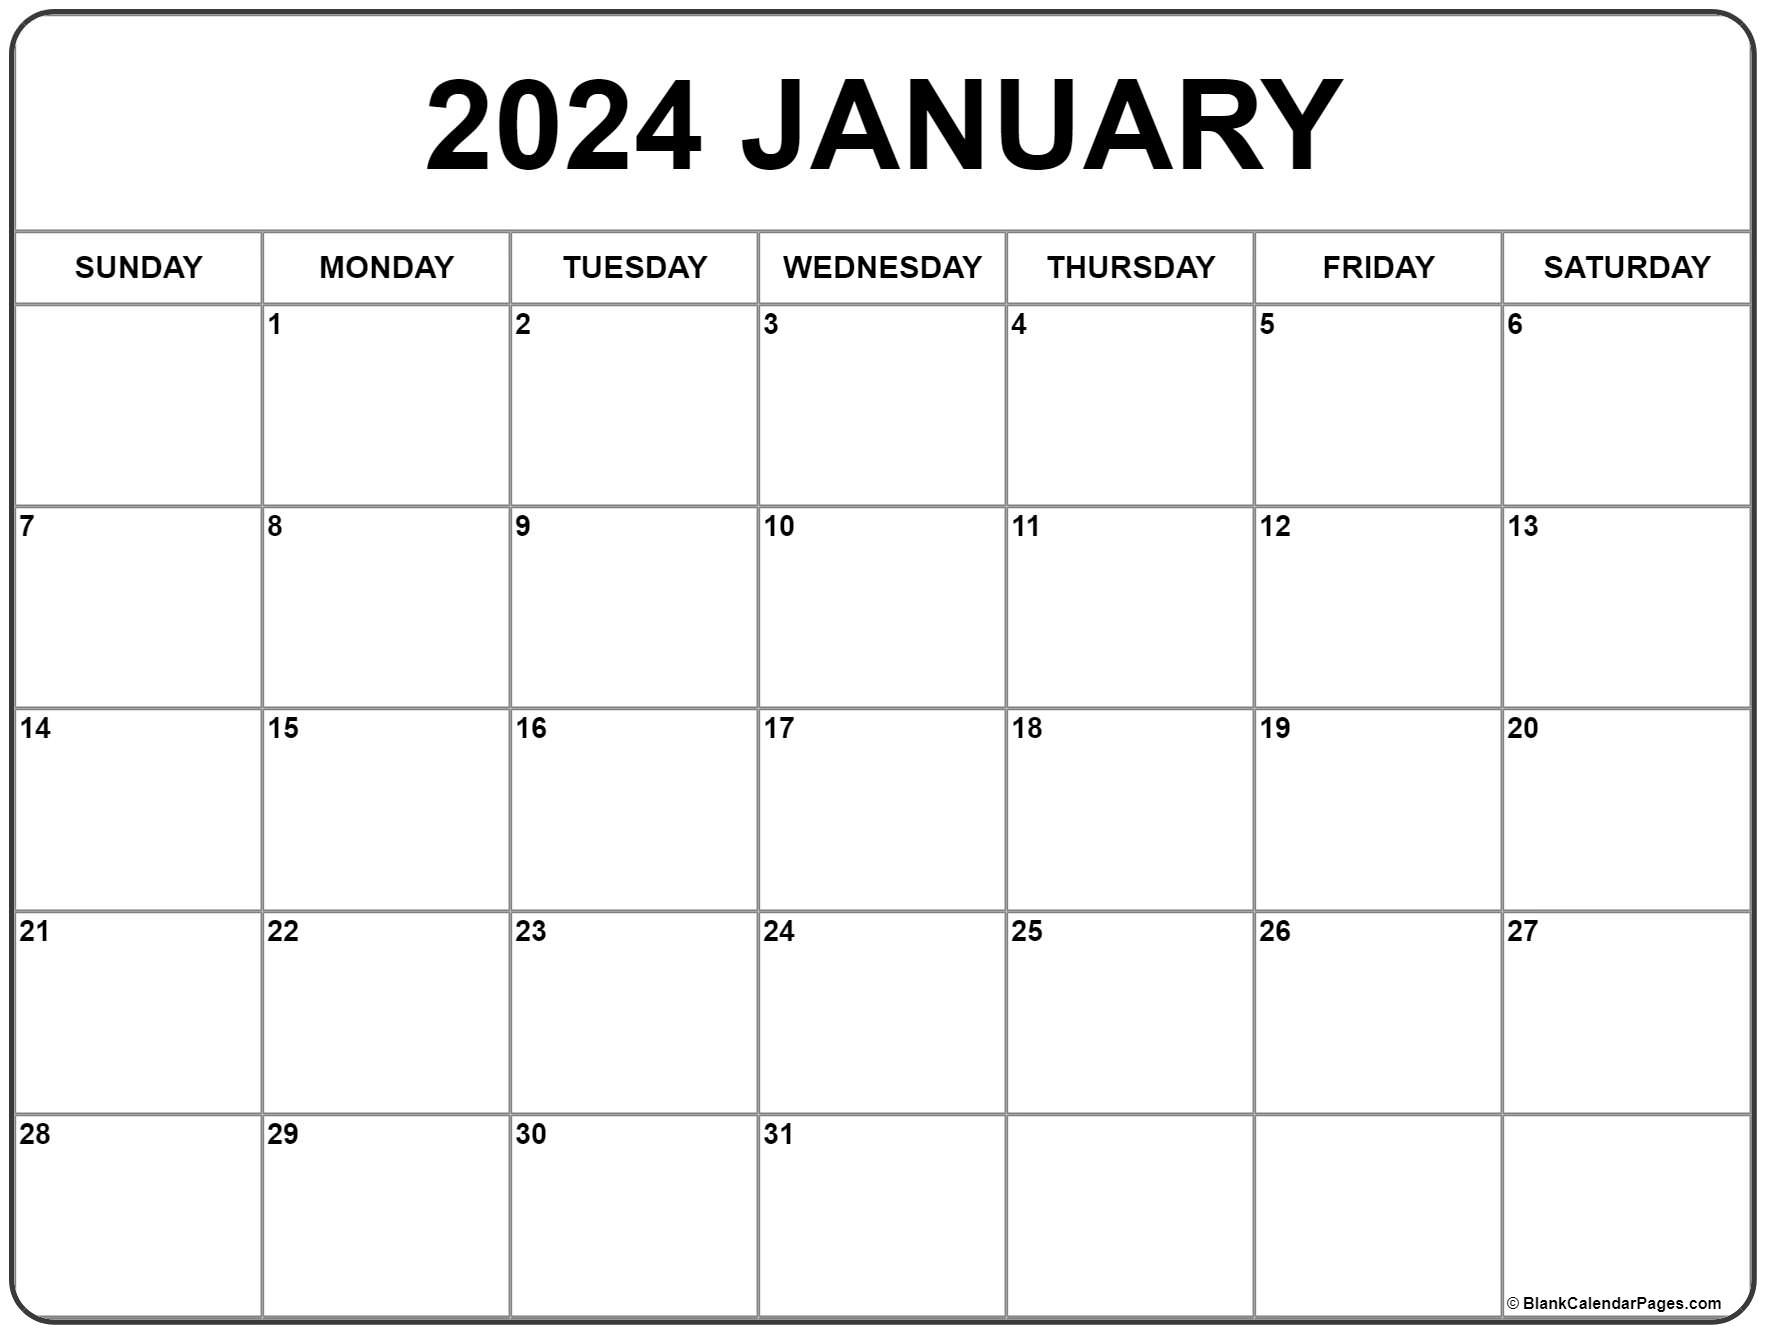 January 2024 Calendar | Free Printable Calendar for Free Printable Calendar January 2024